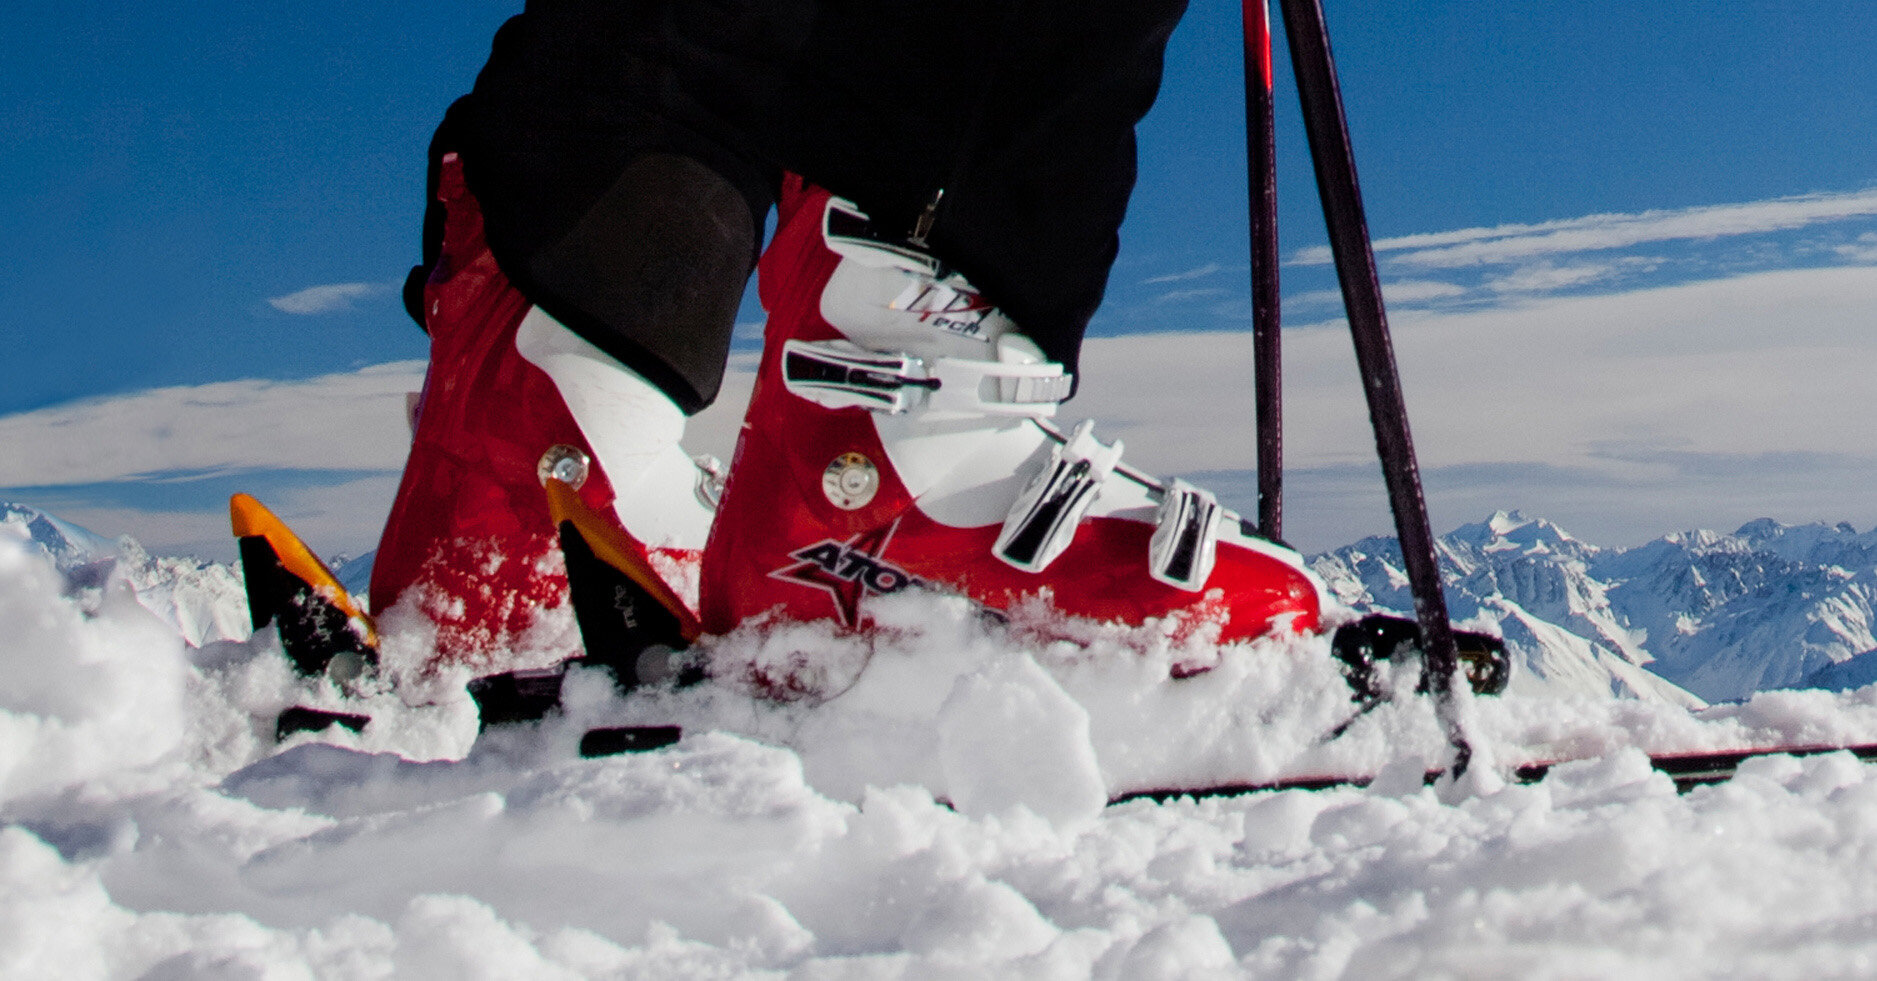 Ski Boots, en